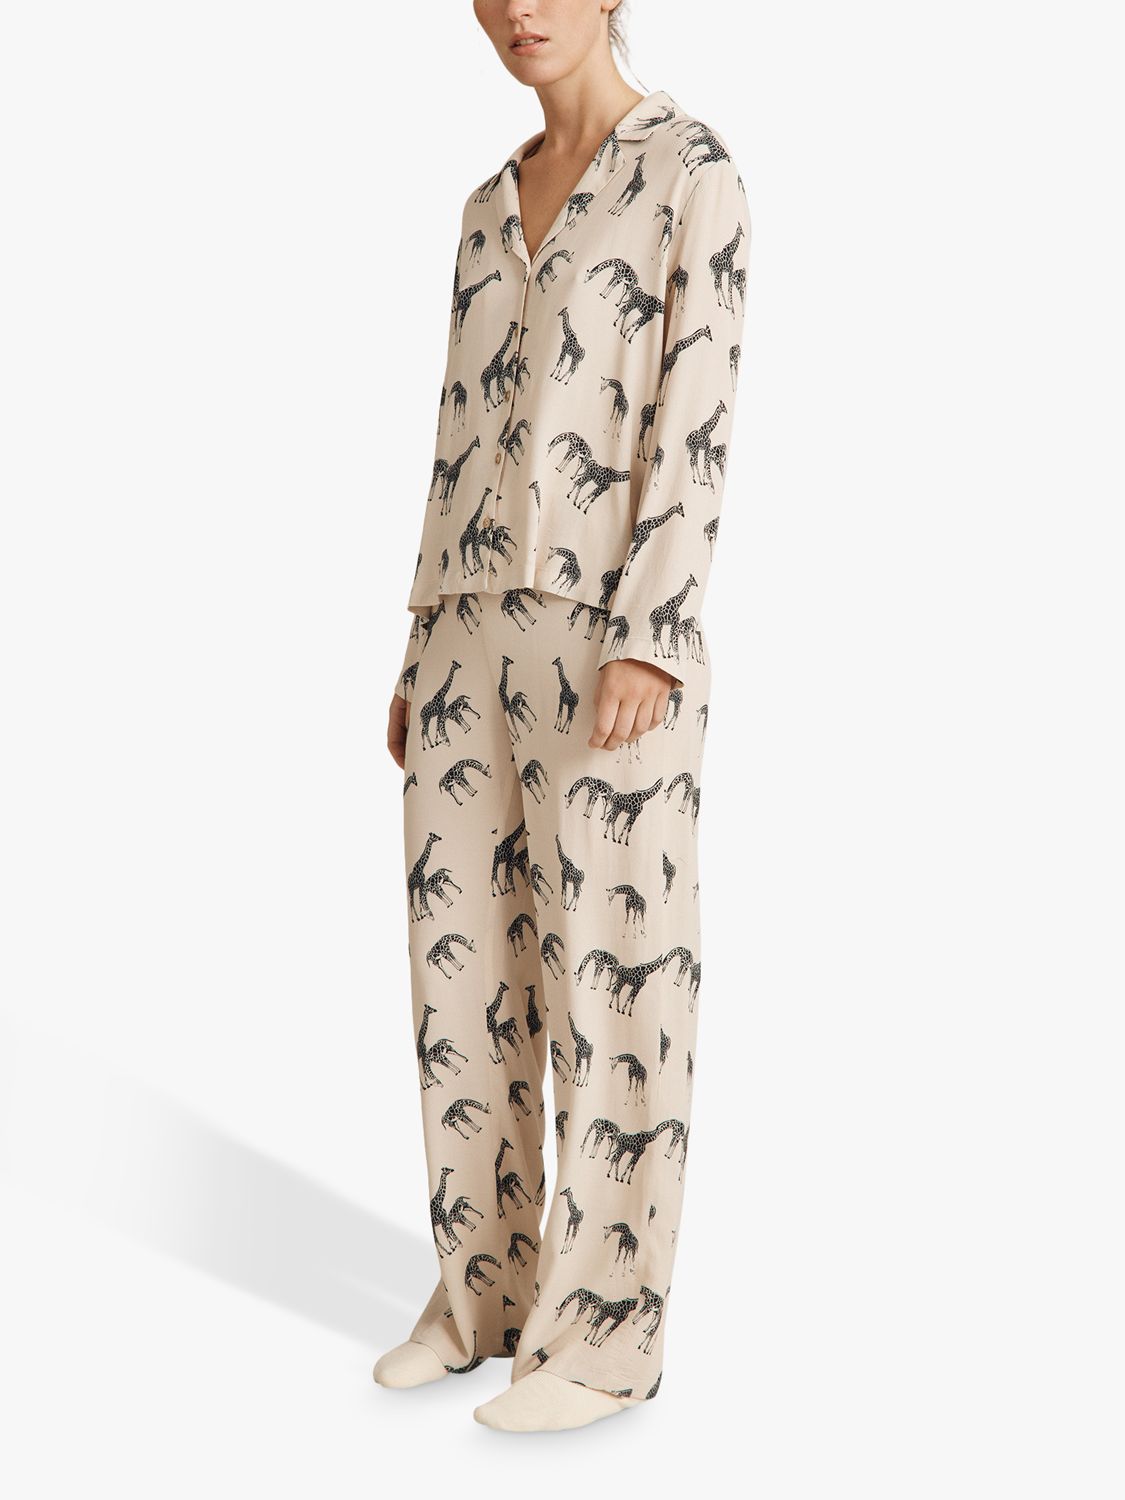 Bourgondië verontschuldiging Botanist Ghost Lara Giraffe Print Pyjama Set, Cream